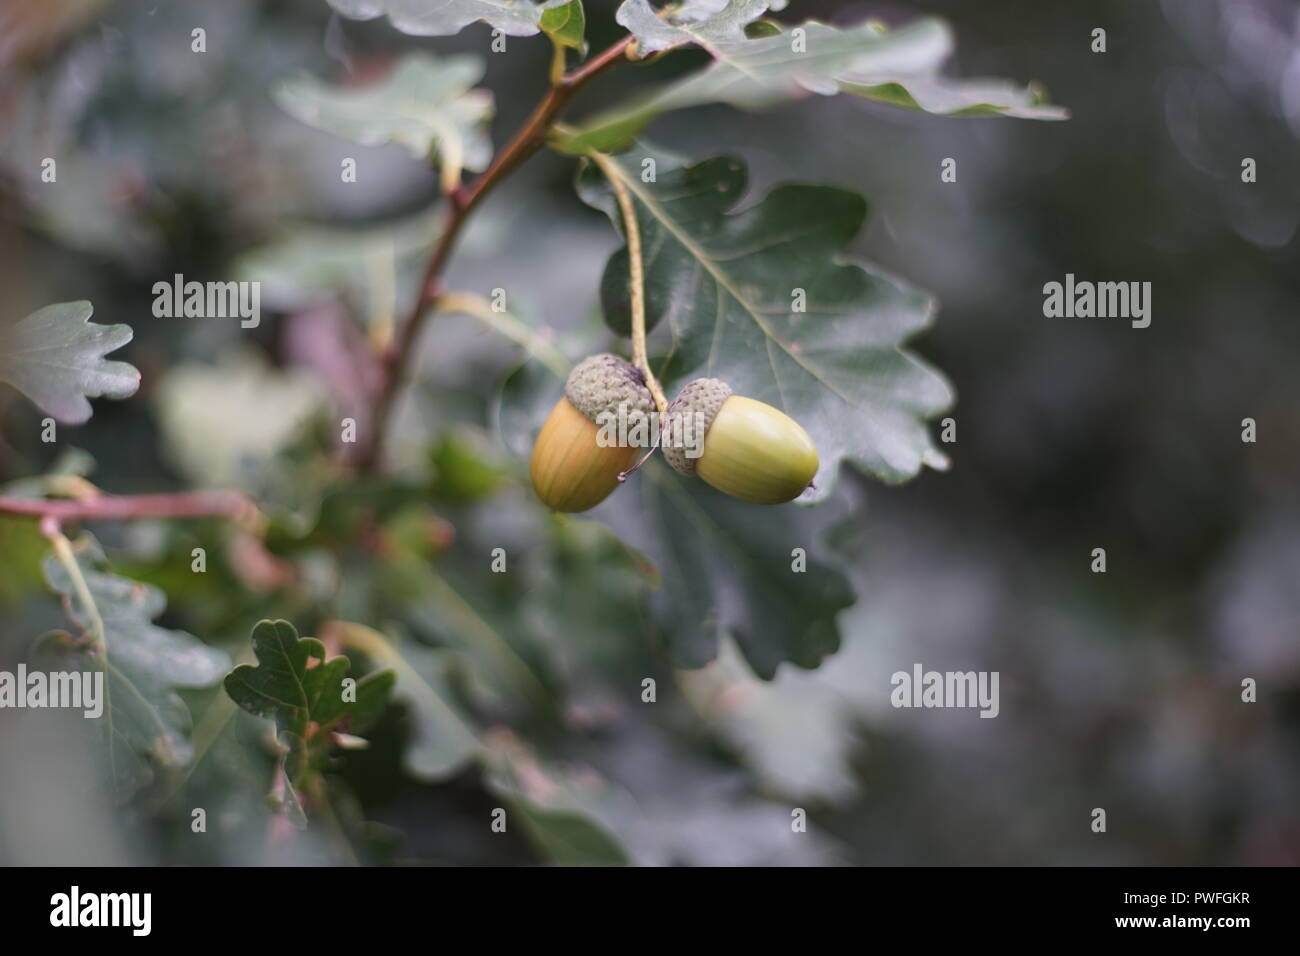 Acorns fruits. Closeup acorns fruits in the oak nut tree against blurred green background. Stock Photo